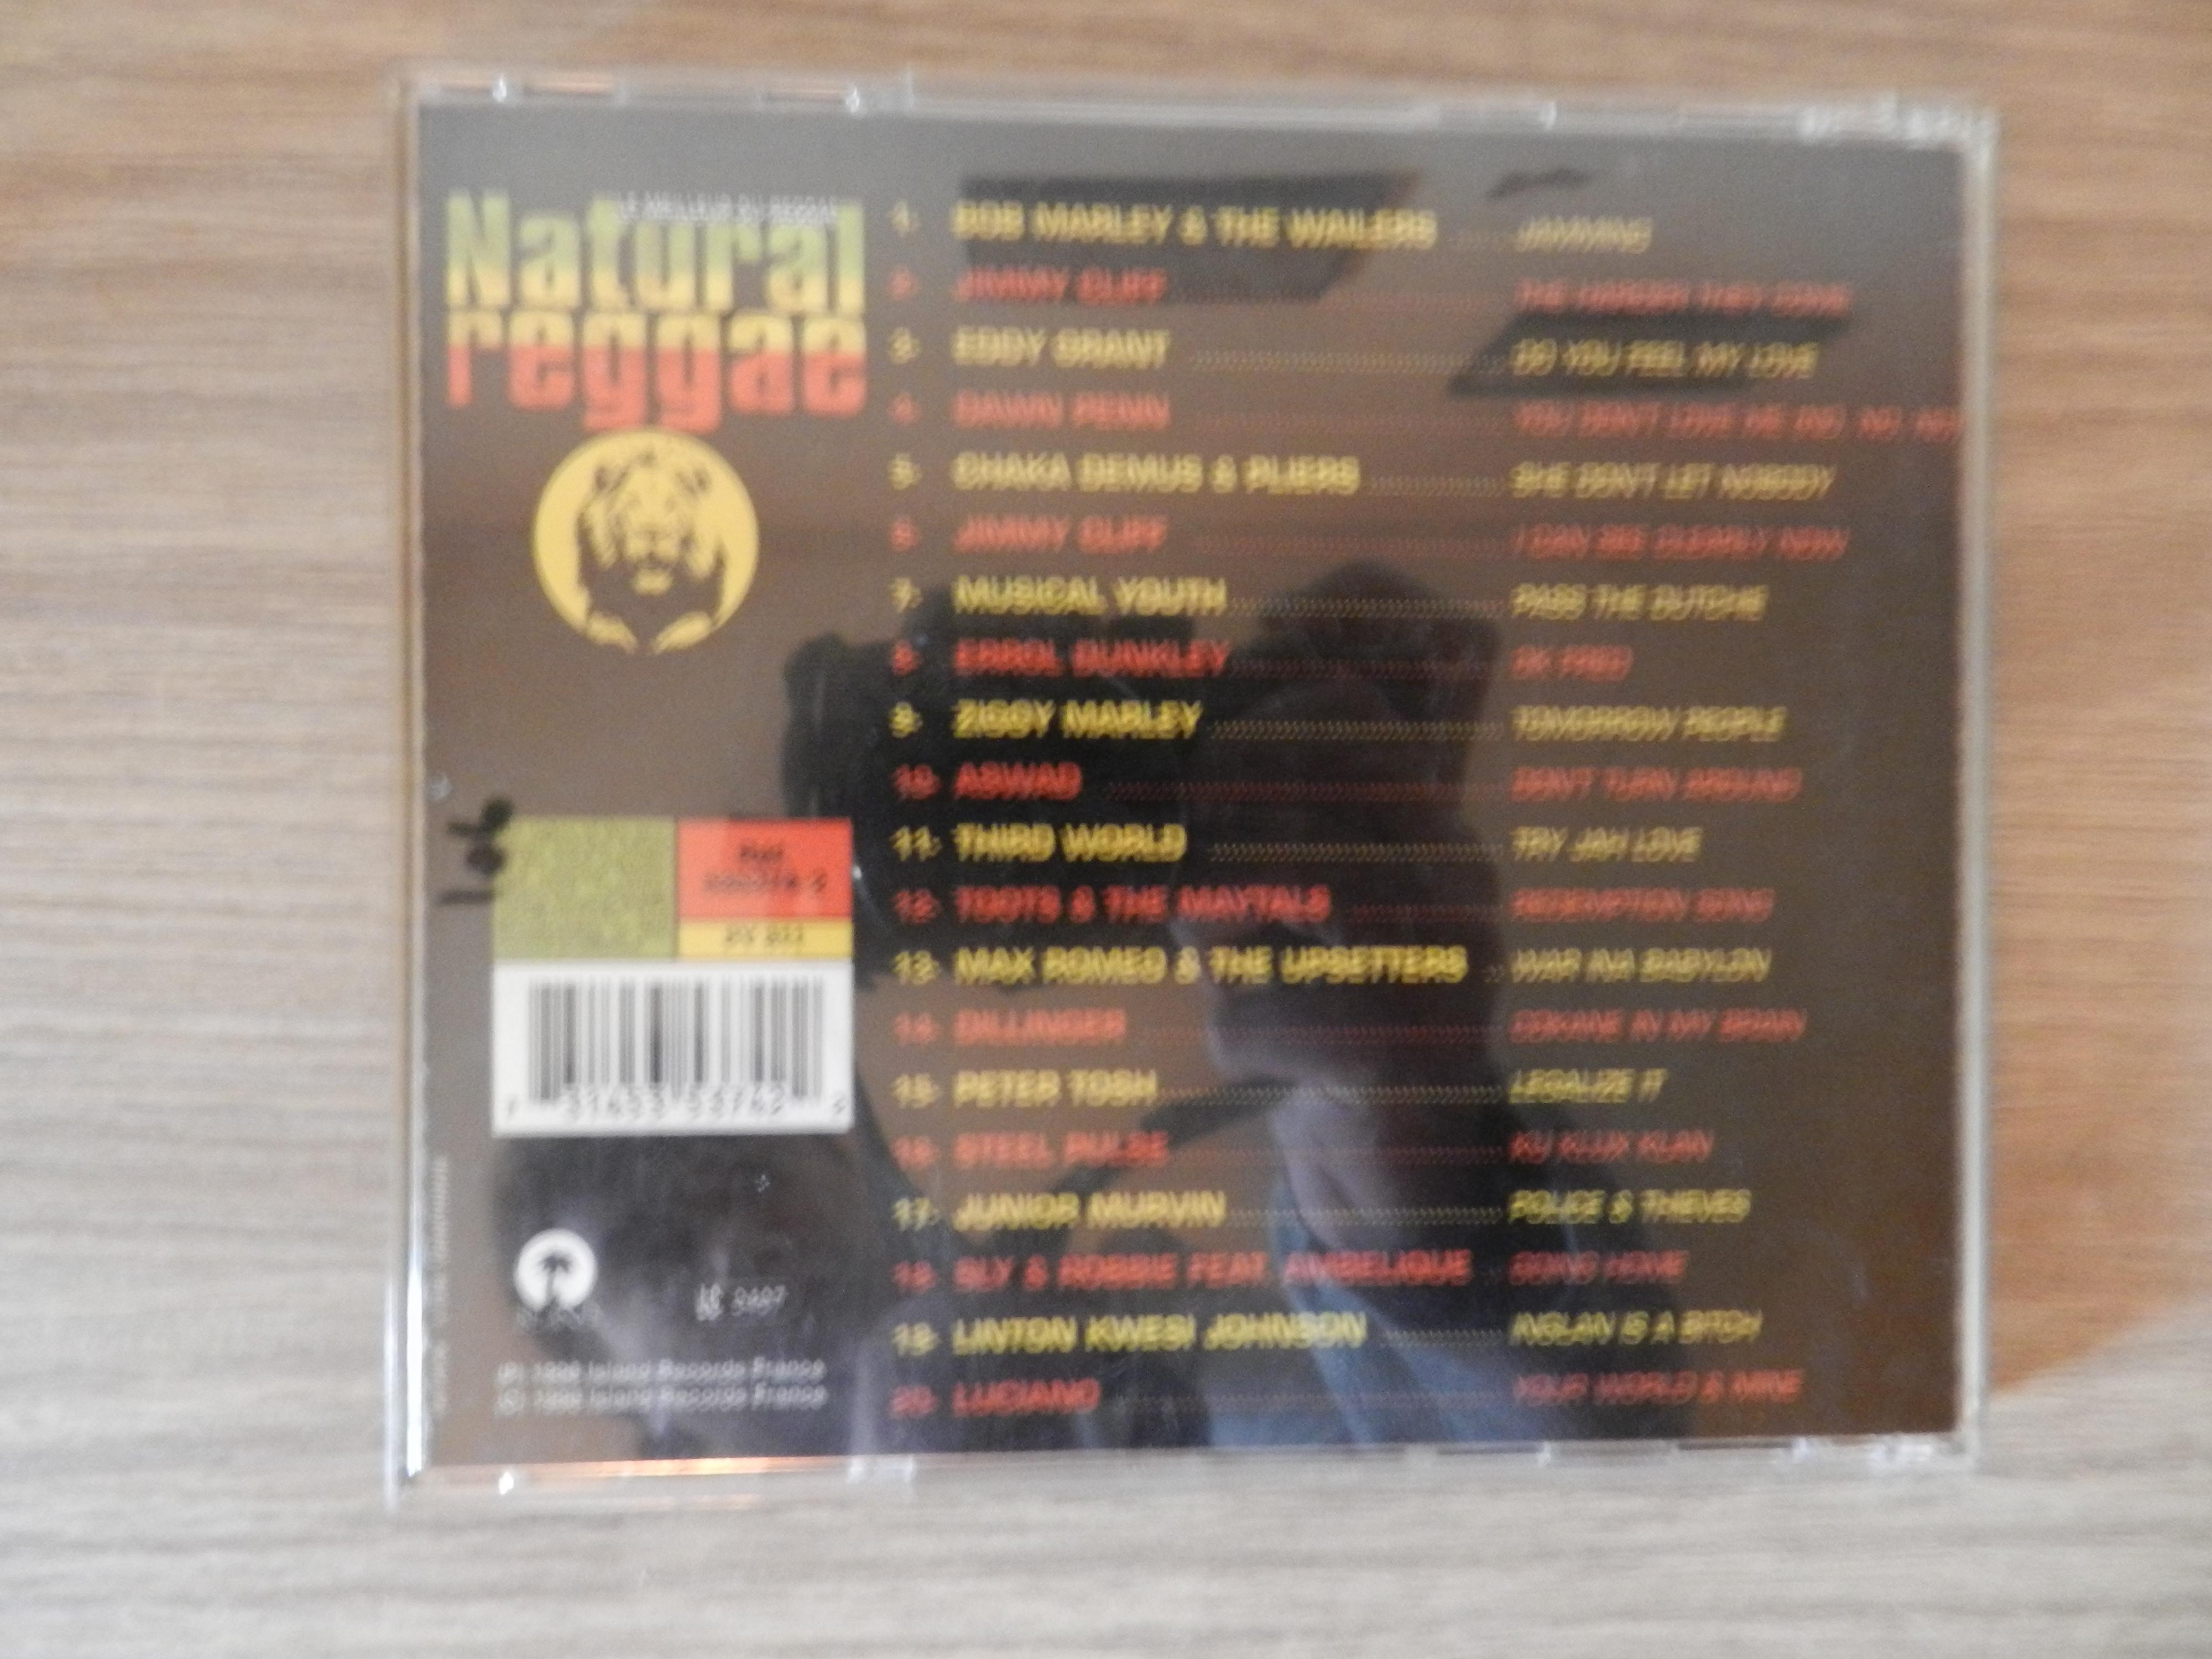 troc de troc cd reggae image 1